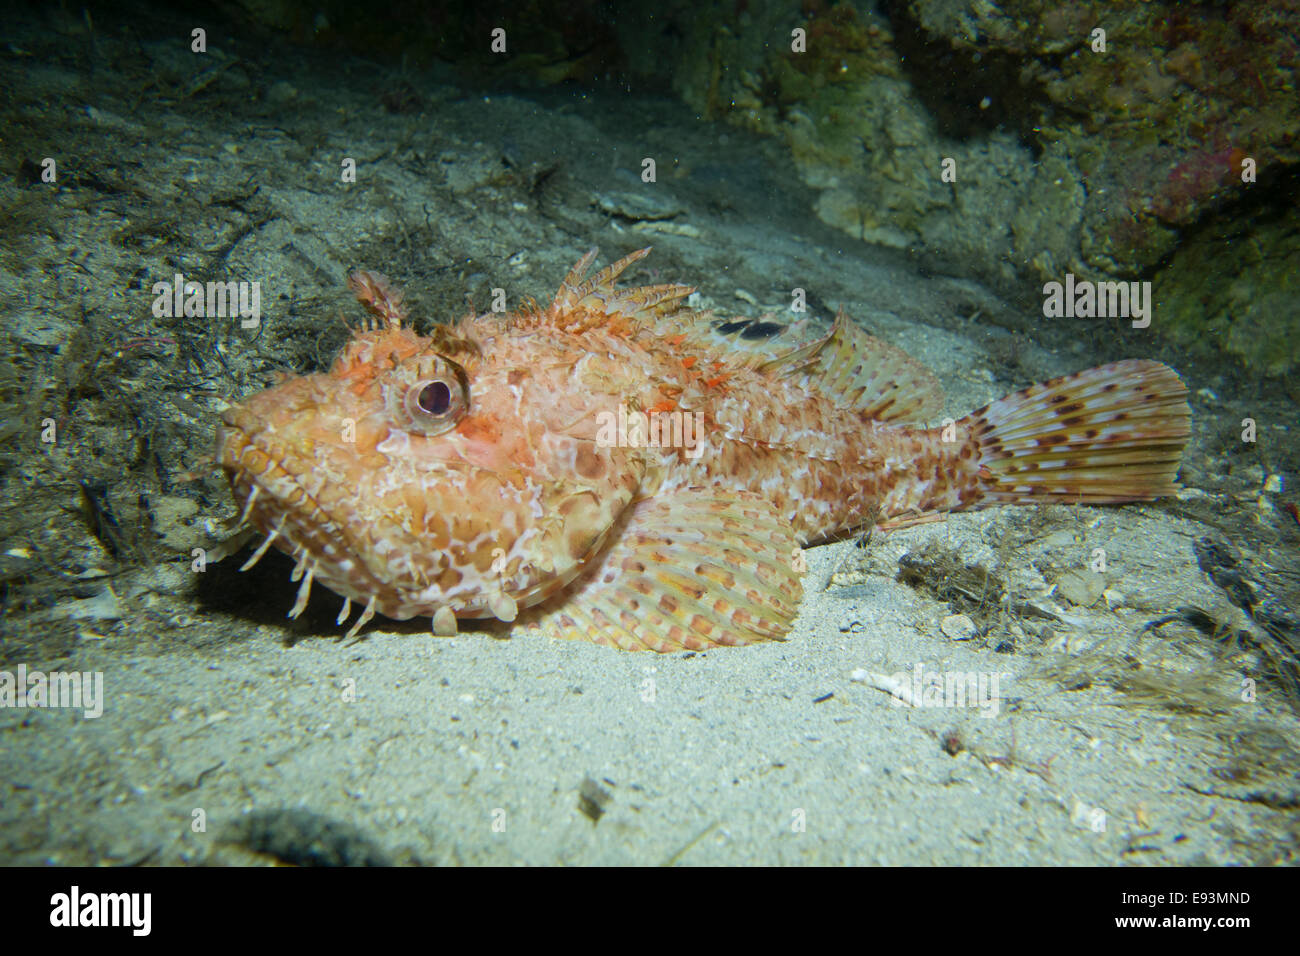 Close-up of a Red Scorpion fish, Scorpaena scrofa,  taken in Malta, Mediterranean Sea. Stock Photo